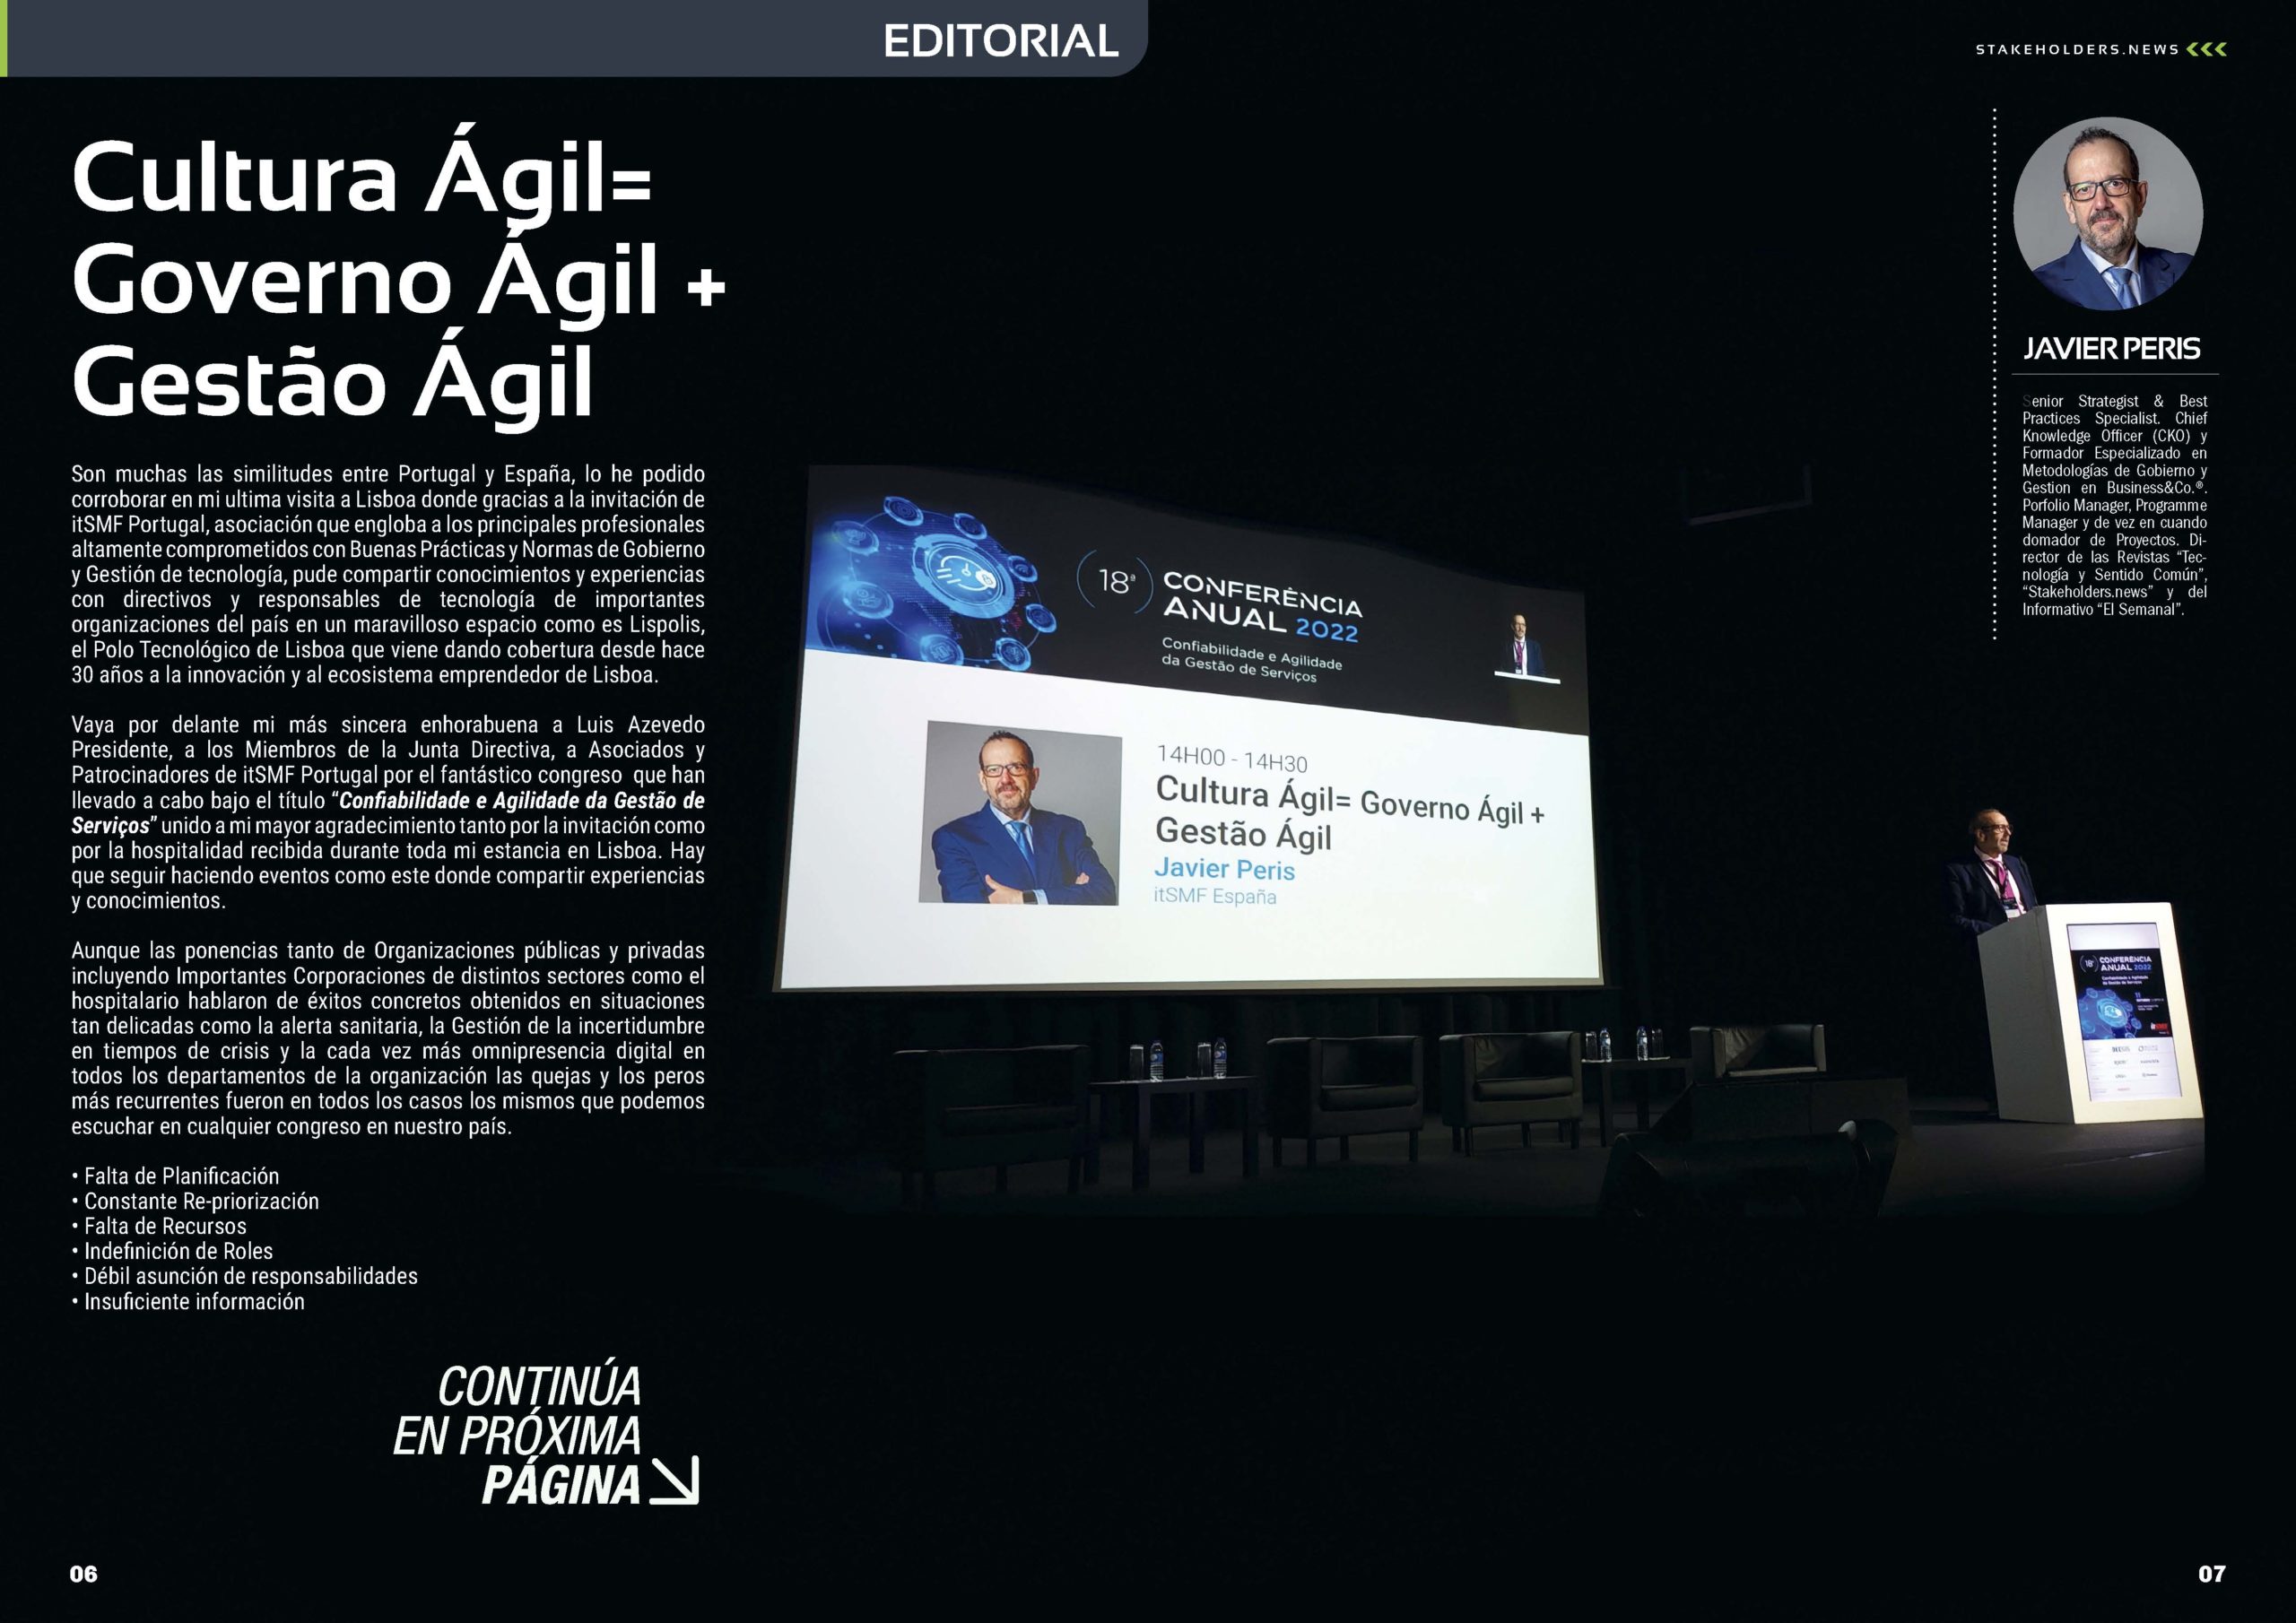 Editorial "Cultura Ágil= Governo Ágil + Gestão Ágil" de Javier Peris en la Revista Stakeholders.news